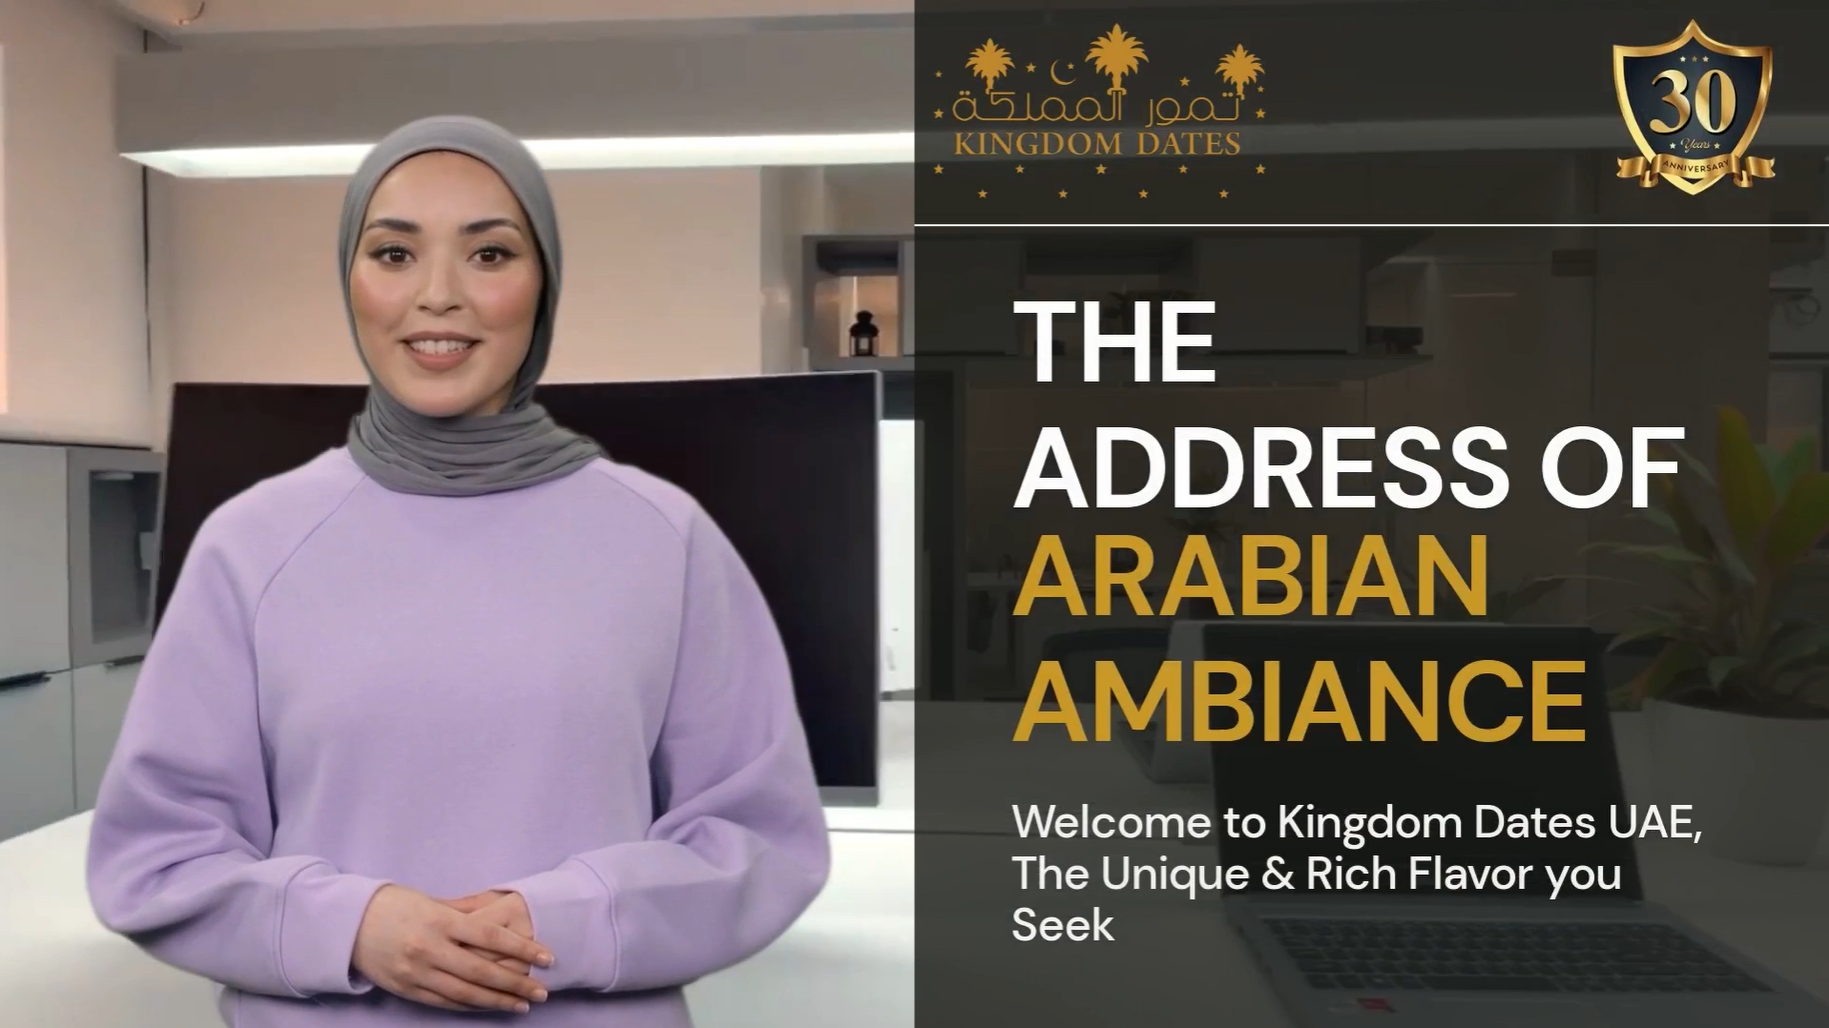 Load video: Kingdom Dates UAE Introduction